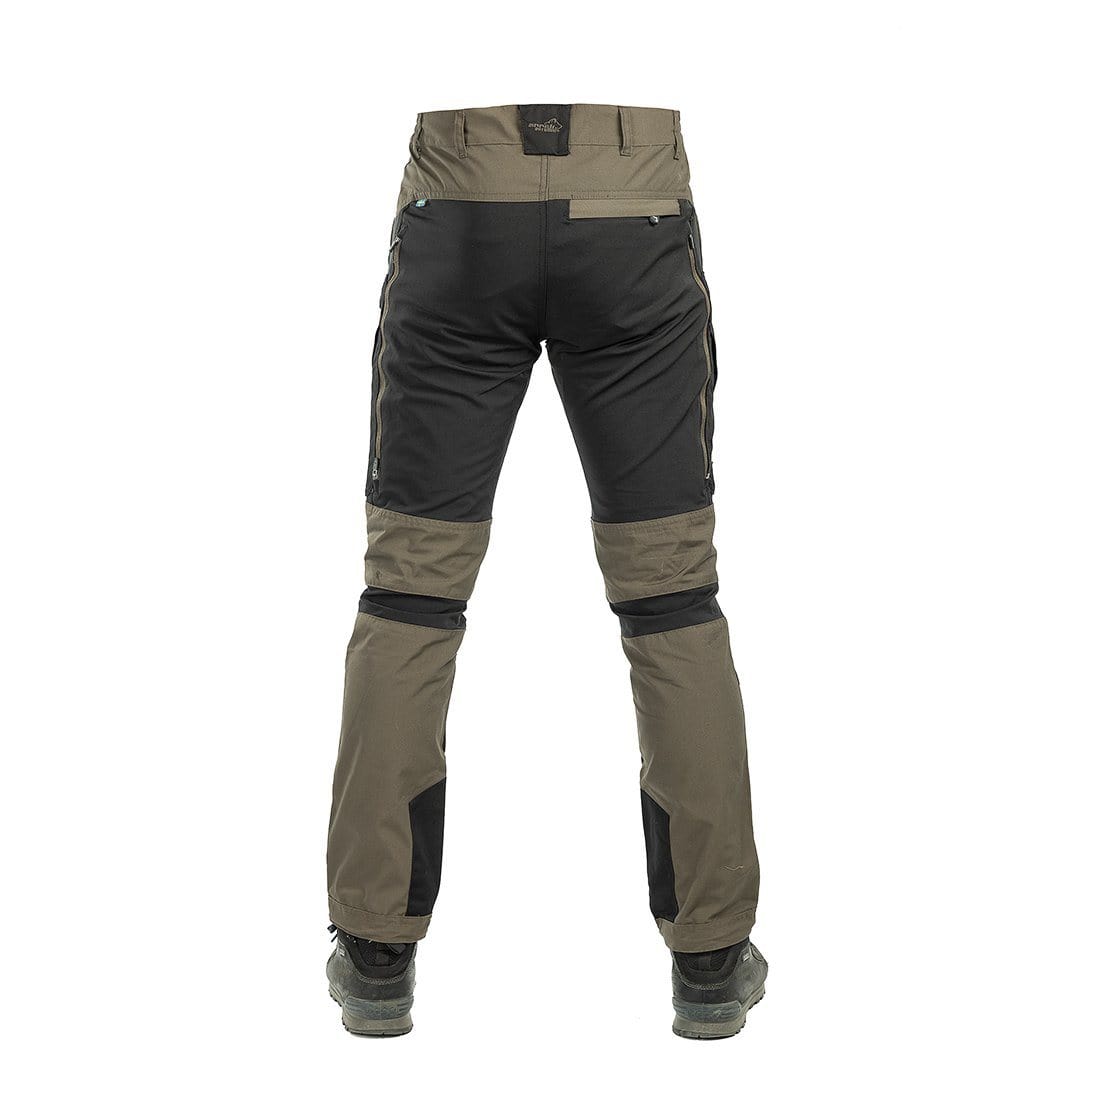 Buy galmajLj Men 's Pants,Men Elastic Lace-up Joggers Sport Pants Outdoor  Hip-hop Harem Long Trousers - Khaki XXL at Amazon.in